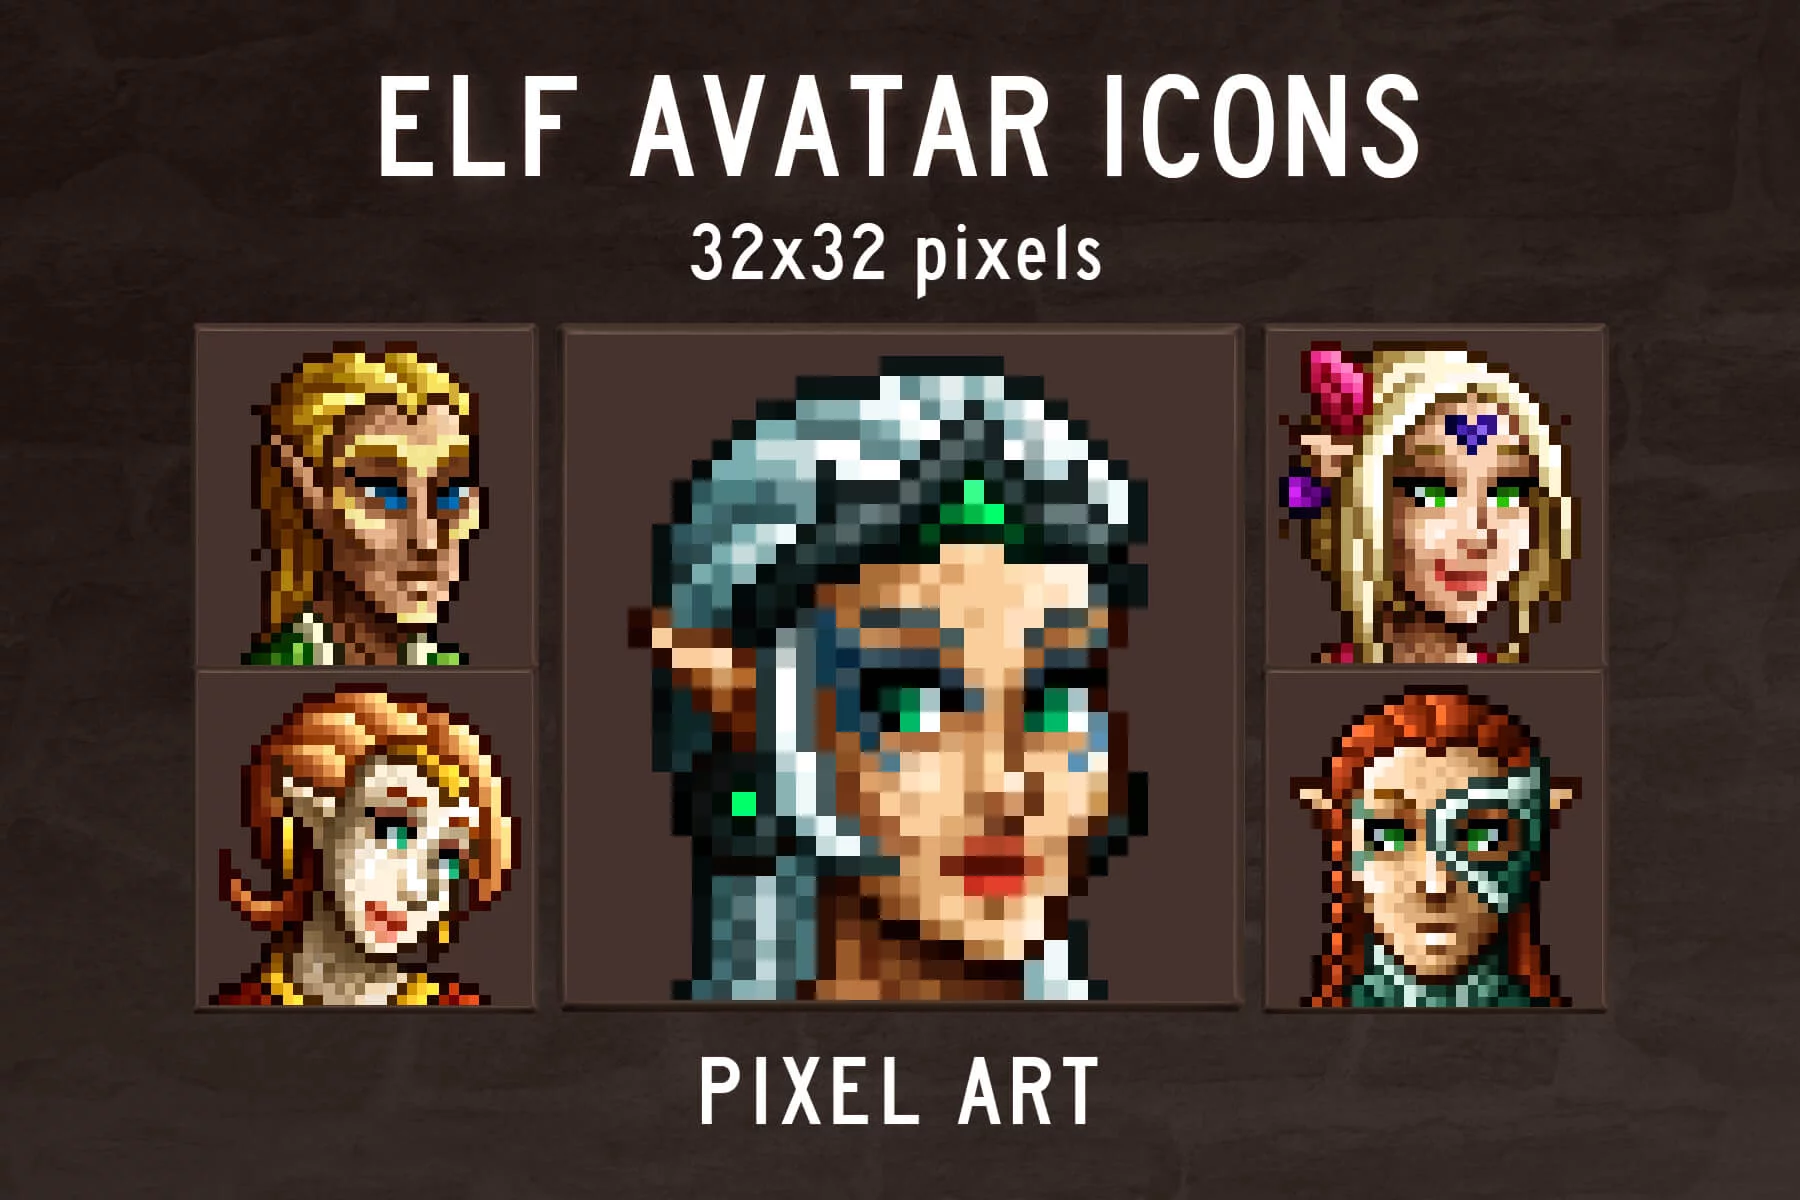 Avatars In Pixels